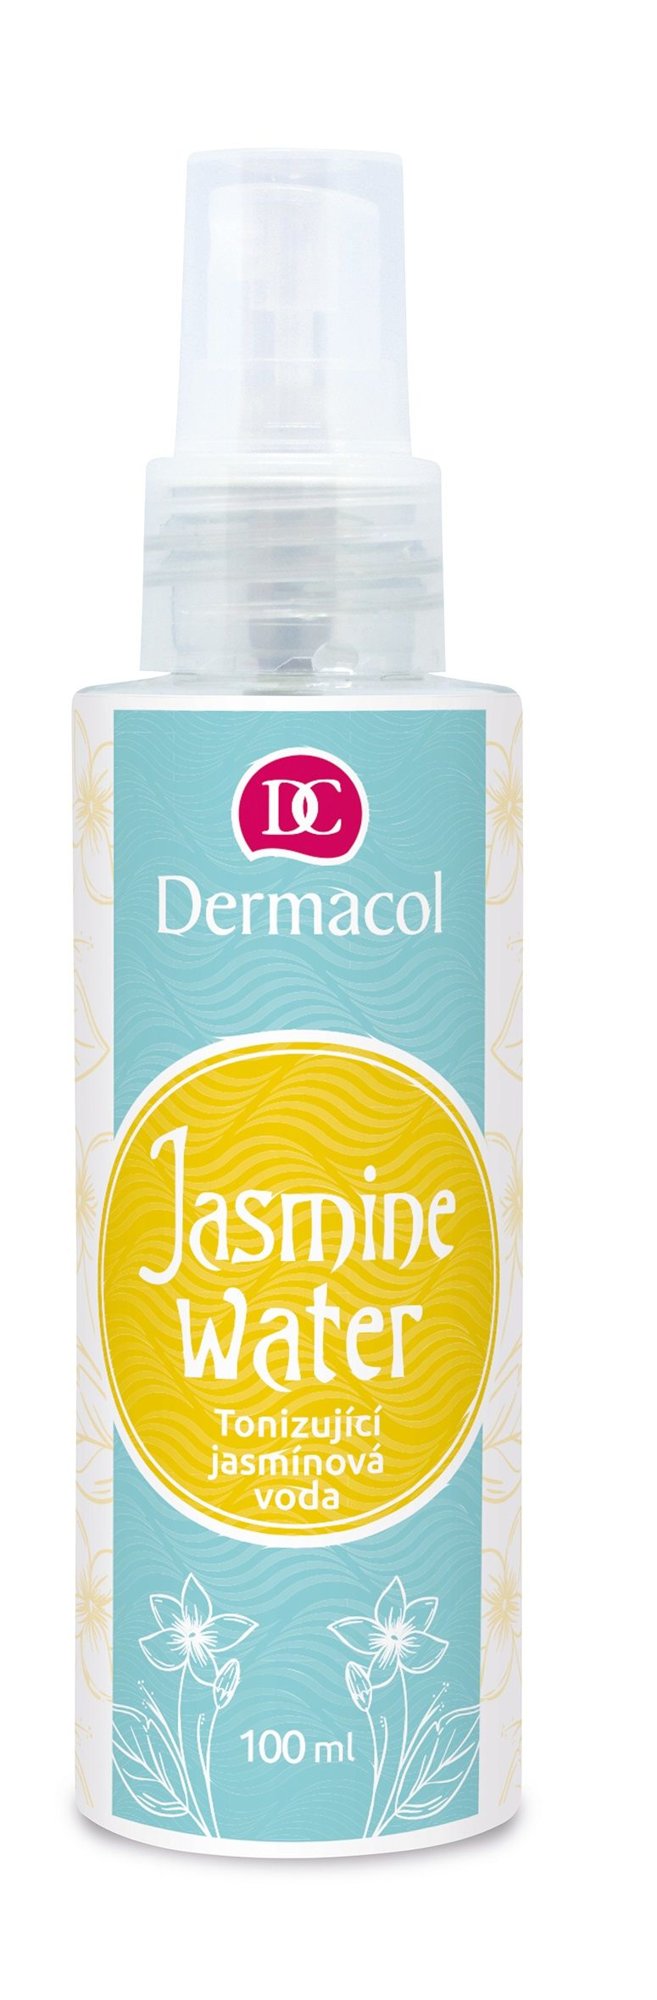 Dermacol Jasmine Water veido losjonas